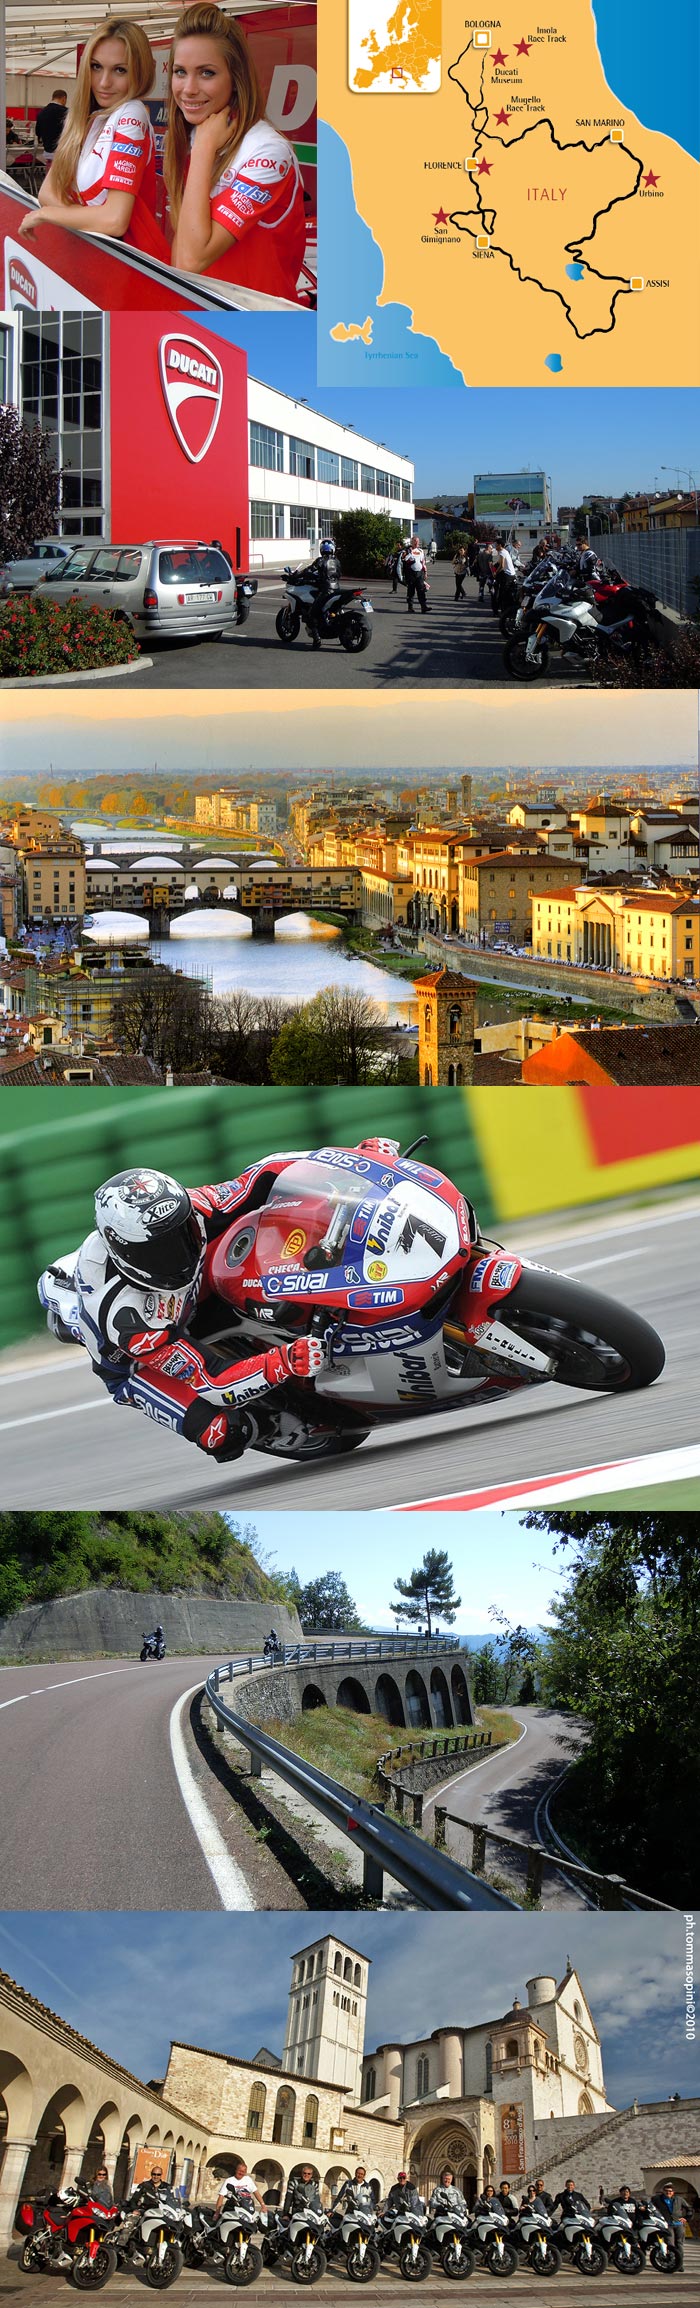 Edelweiss Ducati Italy World Superbike MotoGP Tour